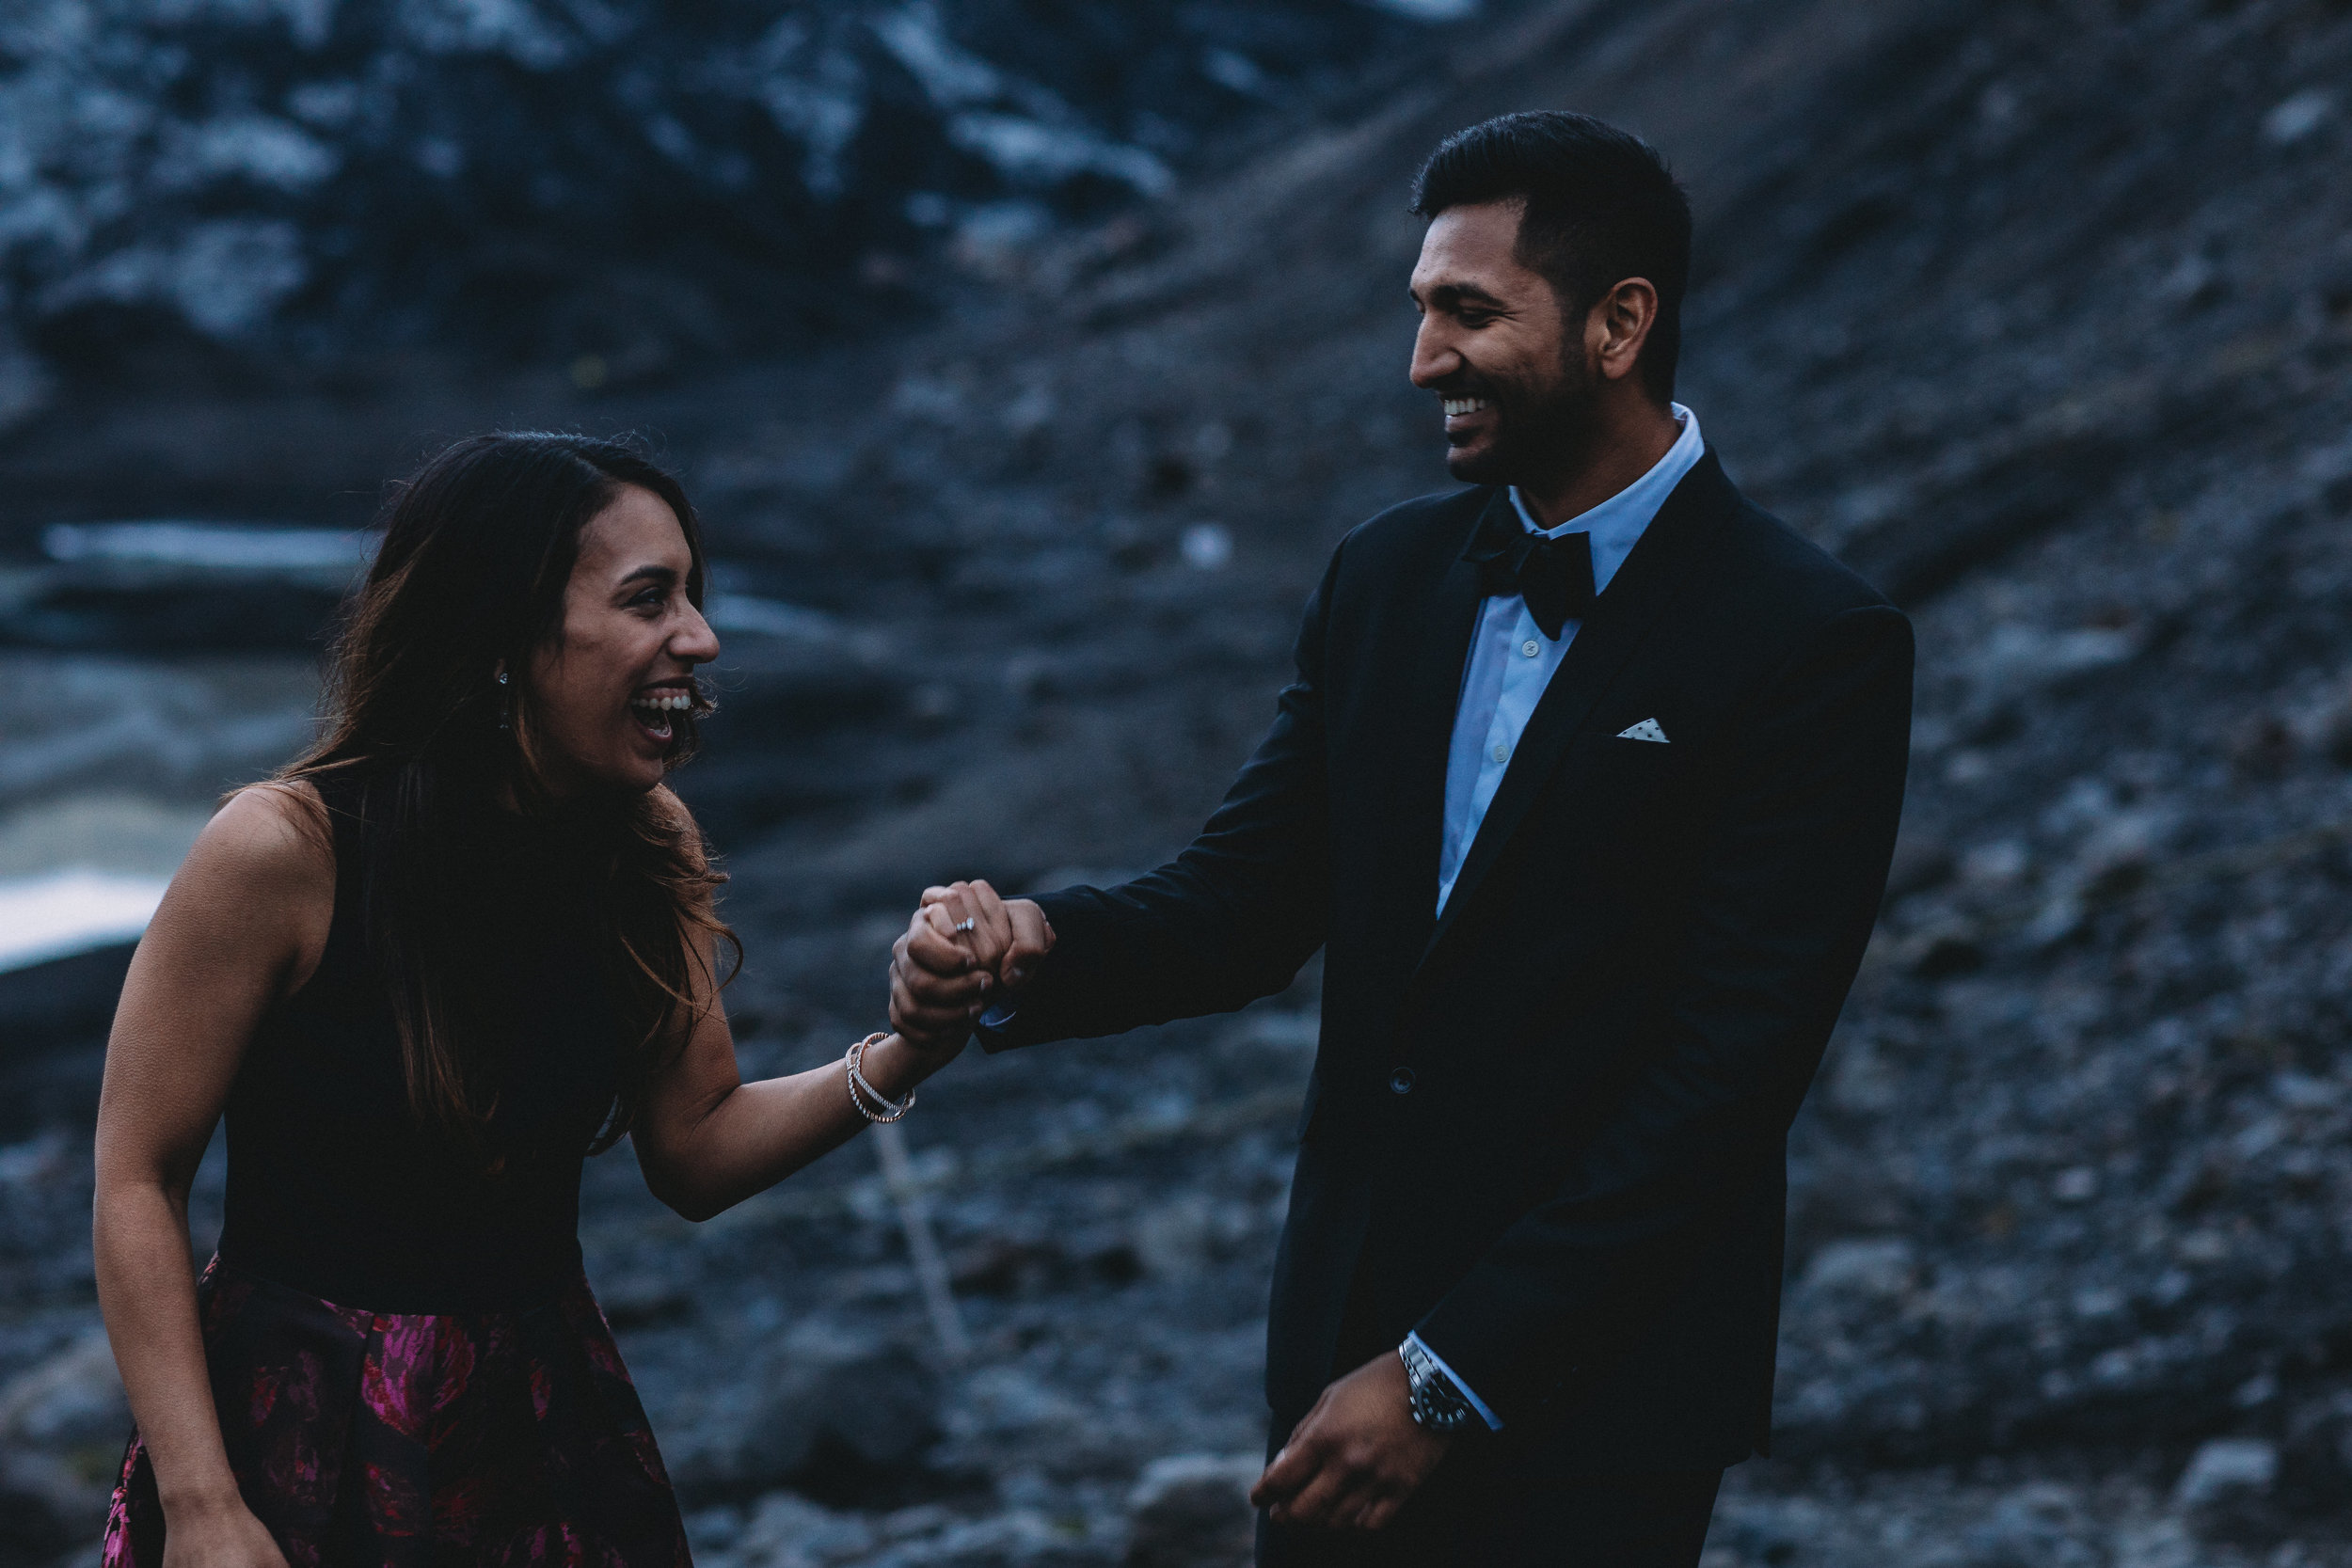 Iceland elopement photographer | Iceland south coast engagement photos | Iceland black sand beach wedding pictures